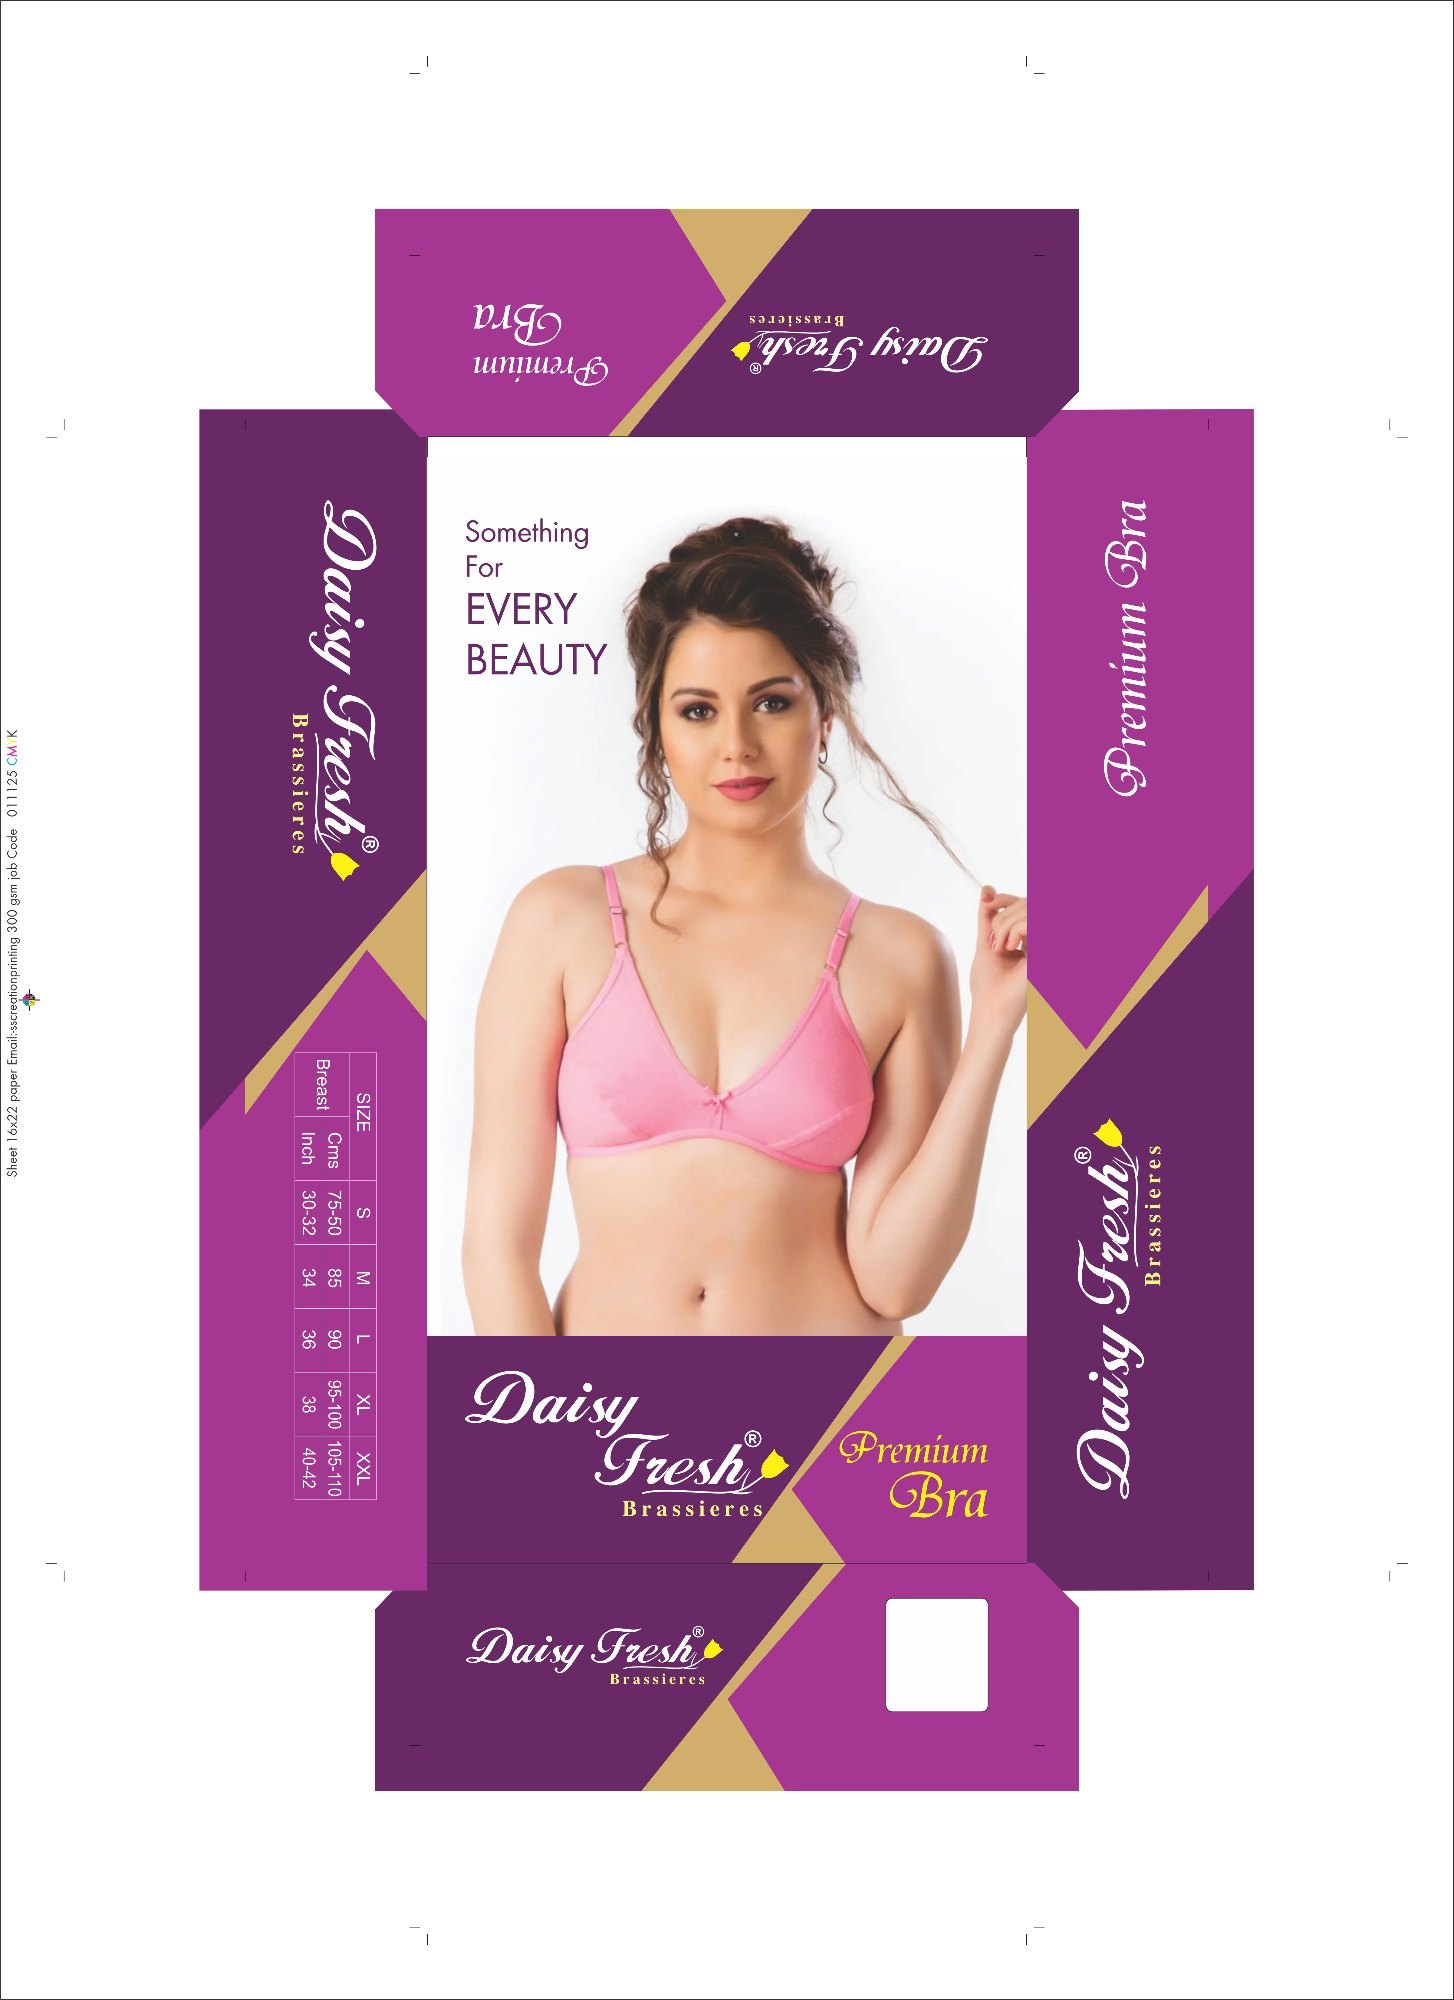 Wholesale bra packaging boxes